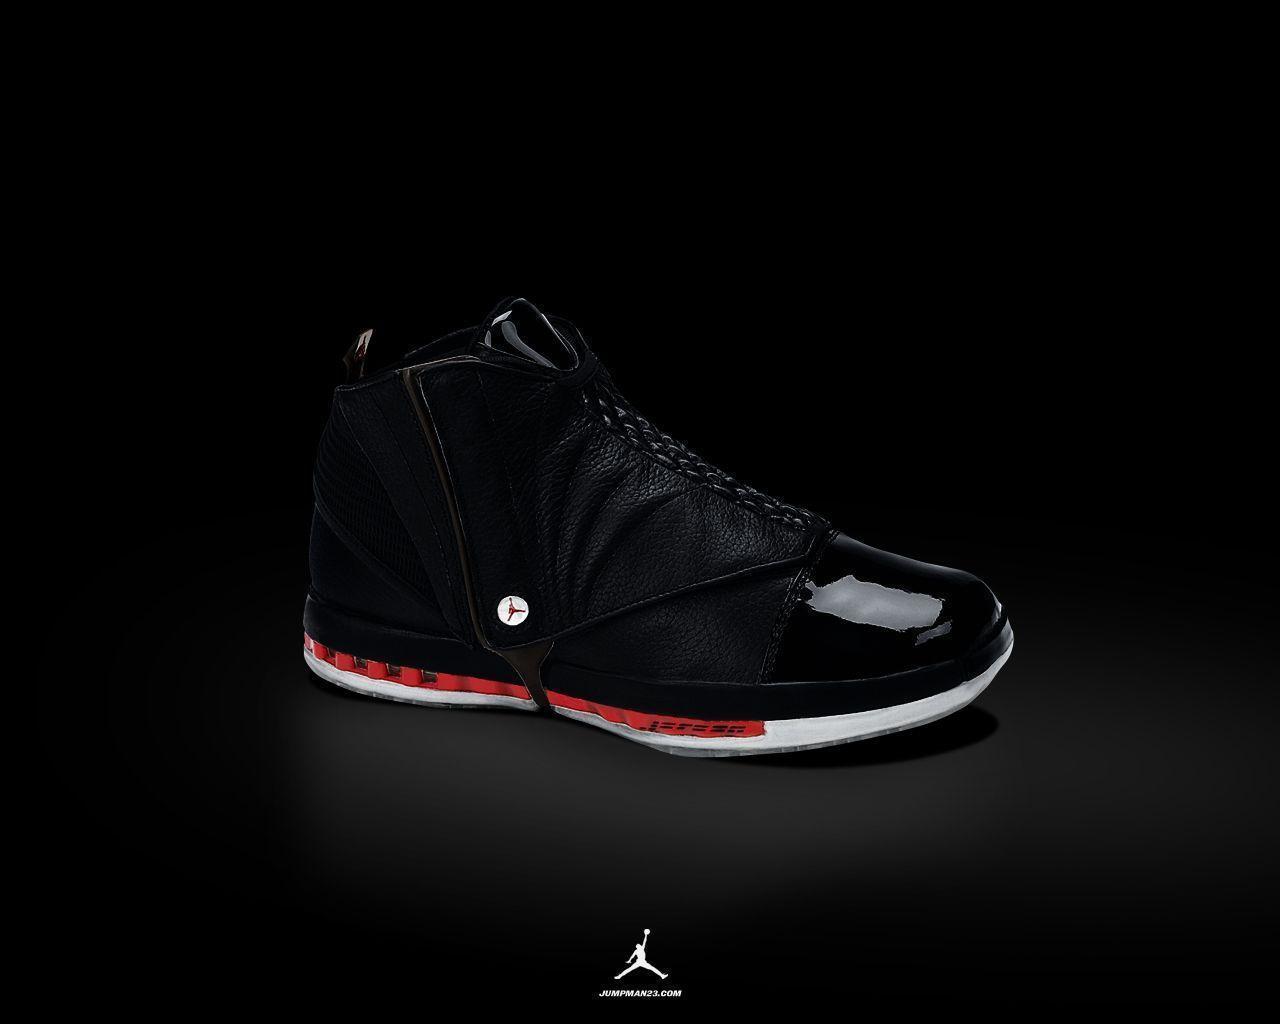 Jordan 2012 Lite Black Basketball Shoes Wallpaper Streetball